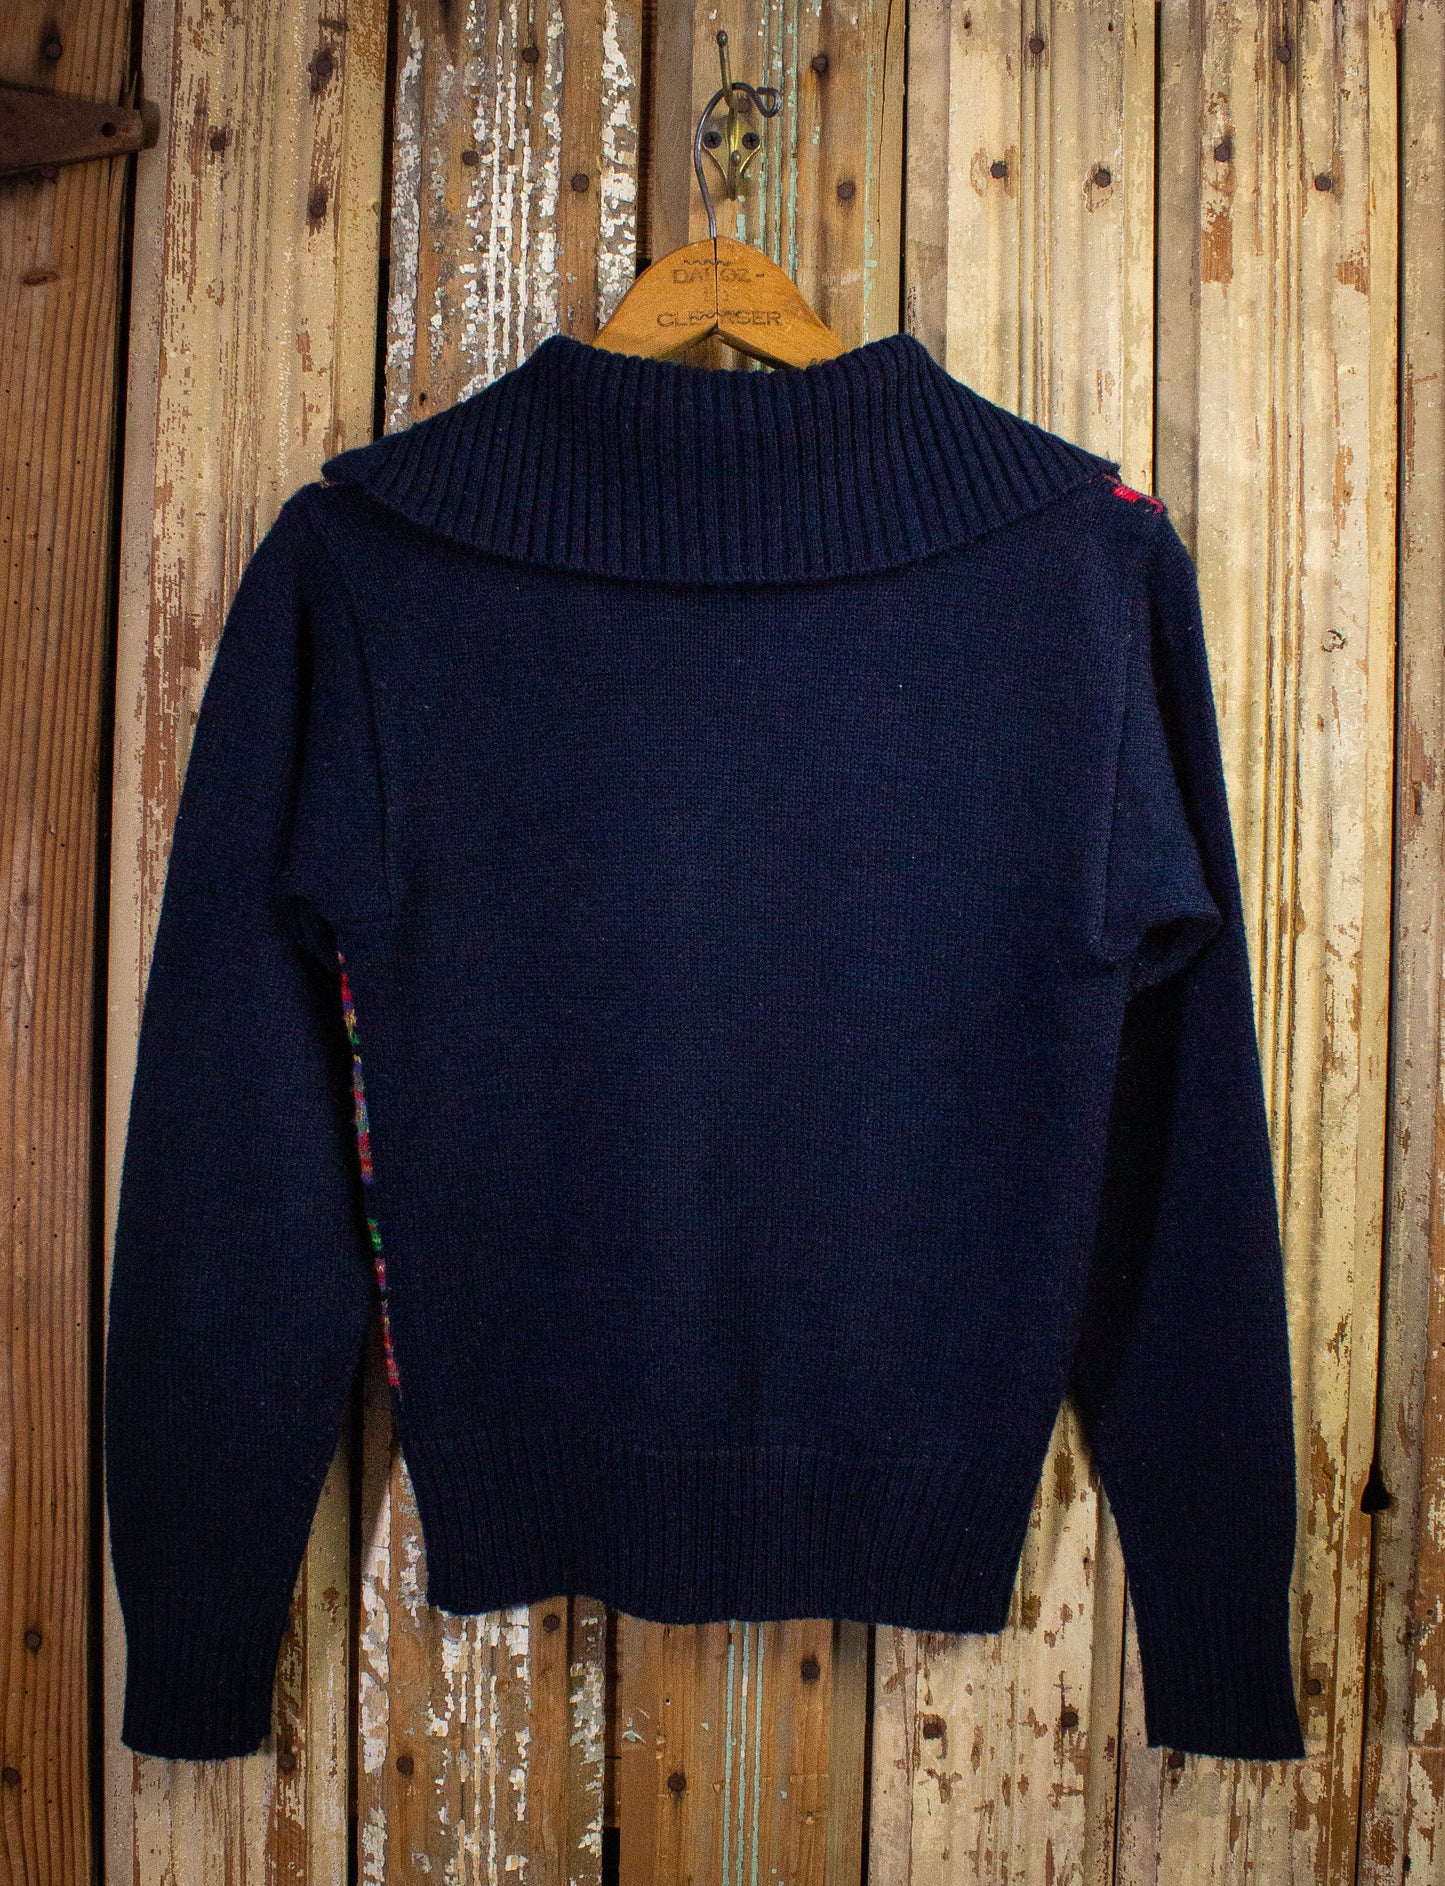 Vintage Women's Geometric Patterned Knit Acrylic Sweater 70s